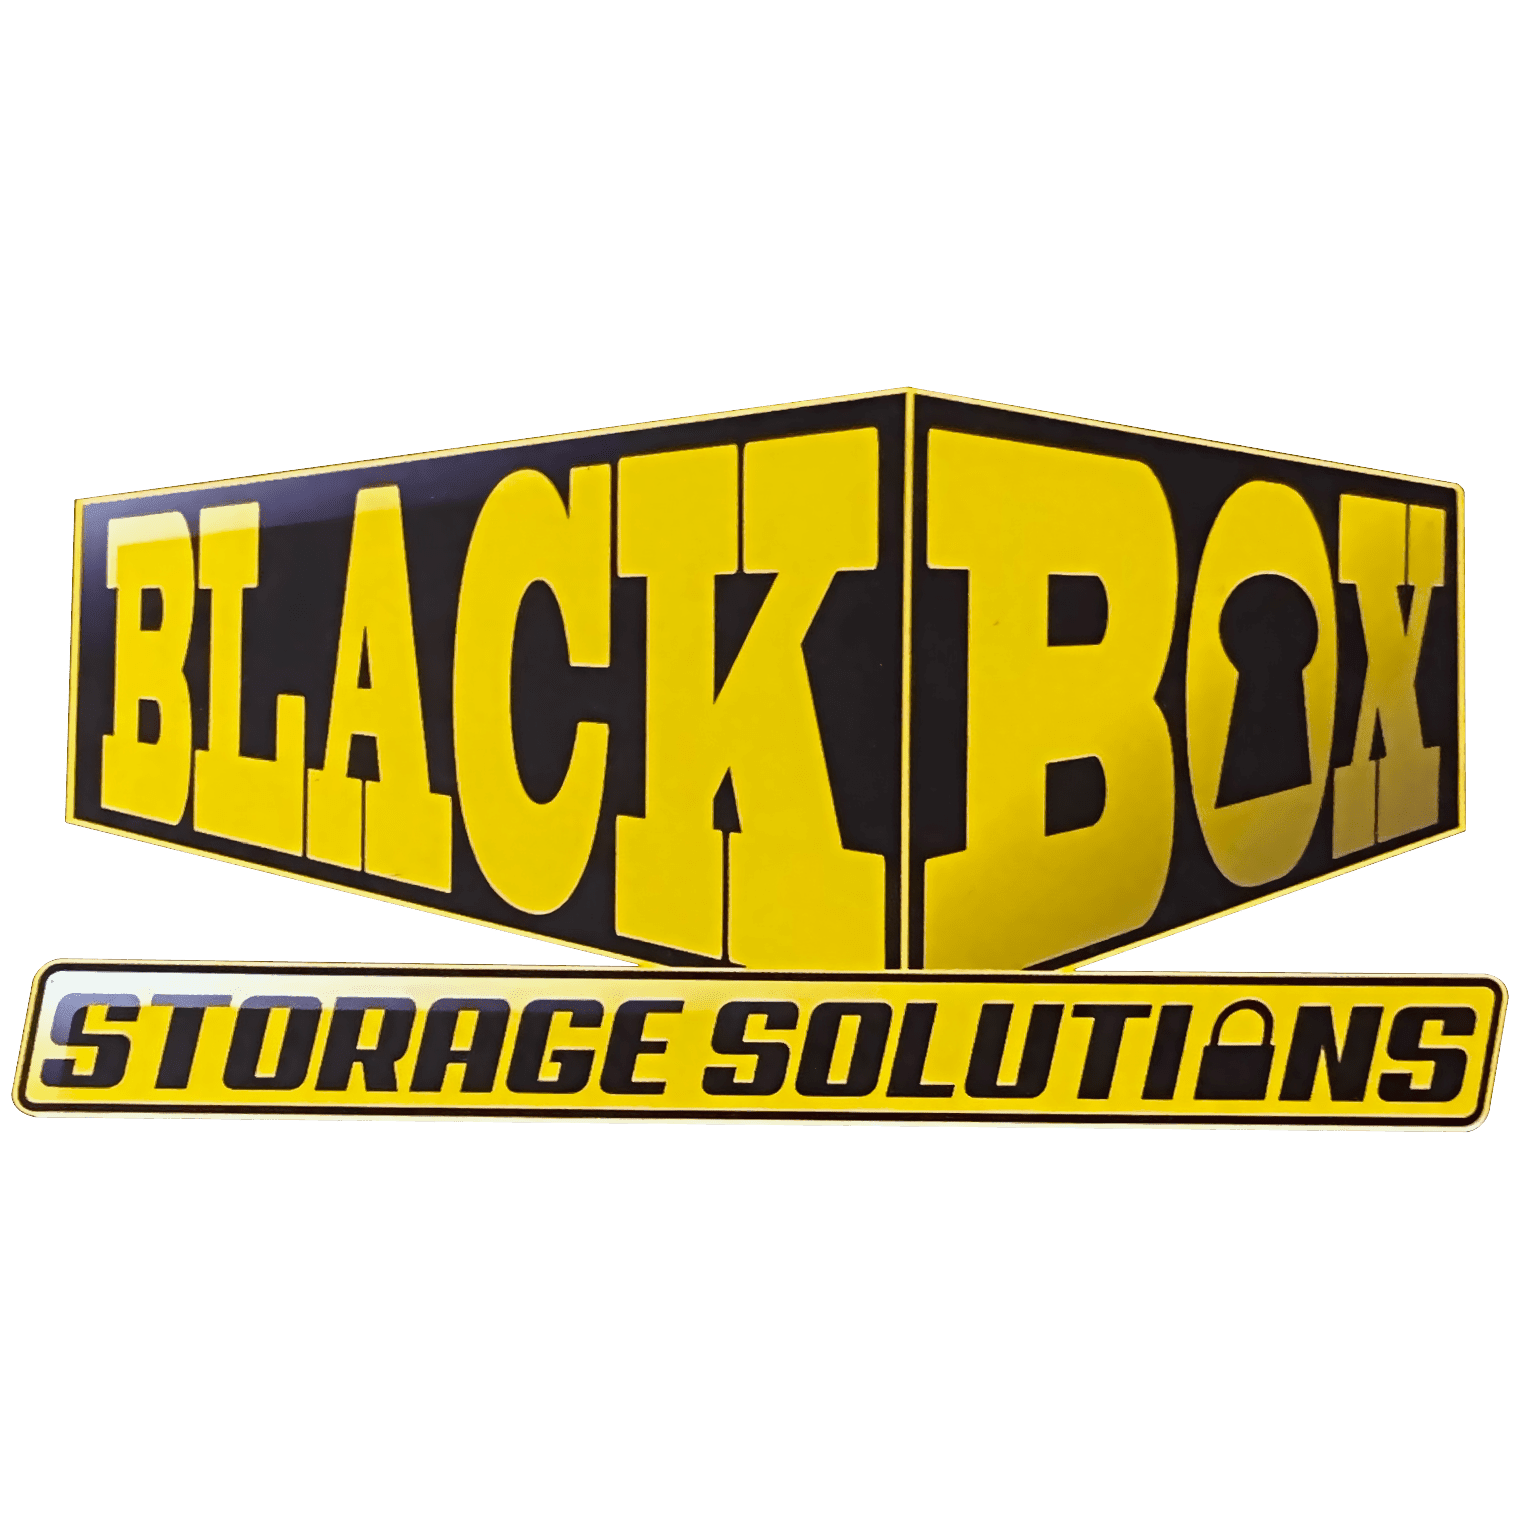 Black Box Storage Solutions Ltd - Hartlepool, North Yorkshire TS25 2BE - 07568 163052 | ShowMeLocal.com